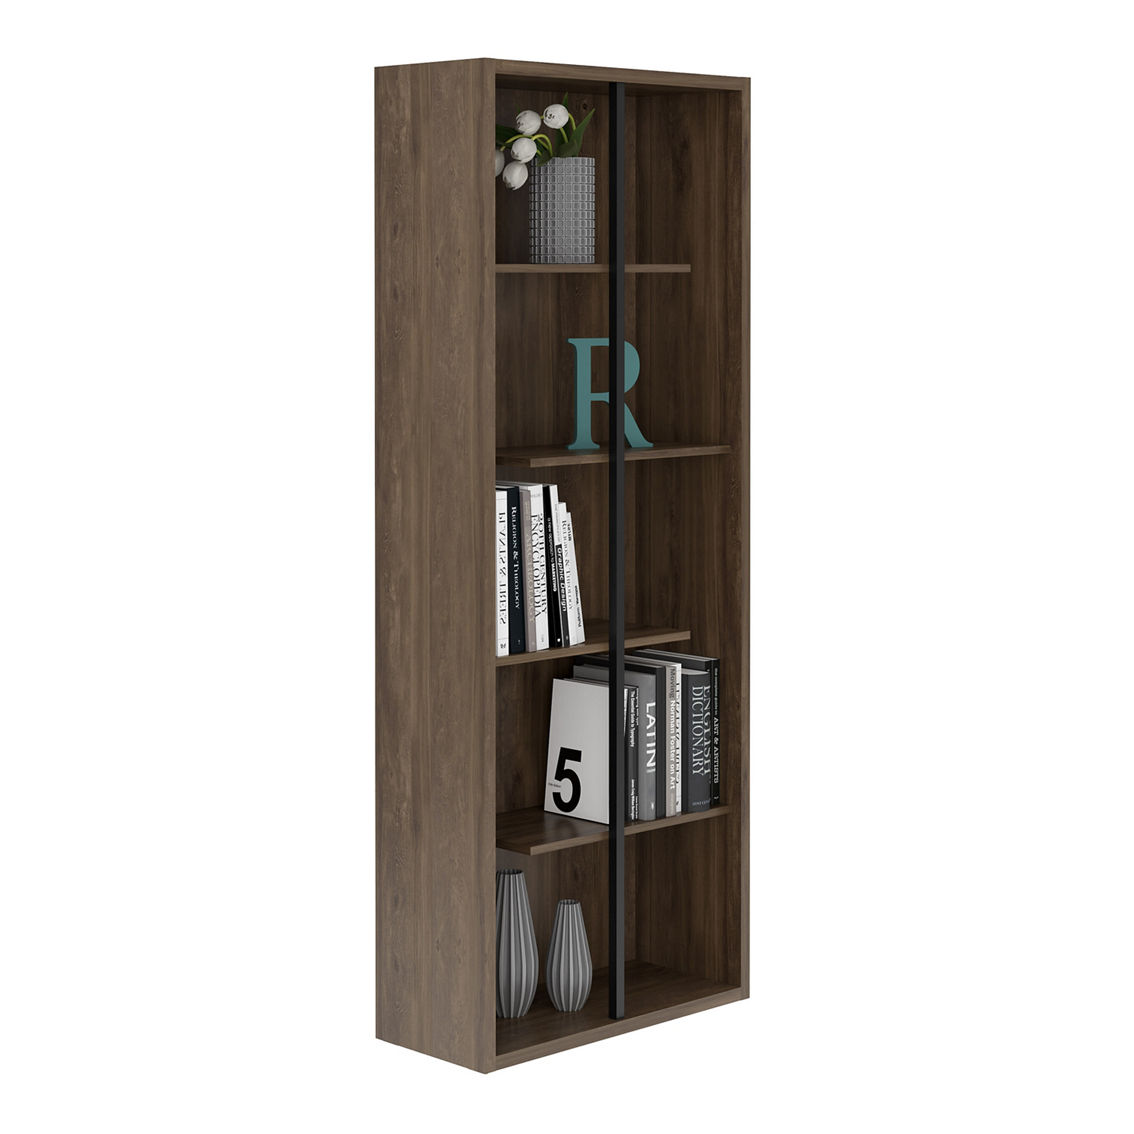 Techni Mobili Standard 5-Tier wooden bookcase, Walnut - Image 2 of 5